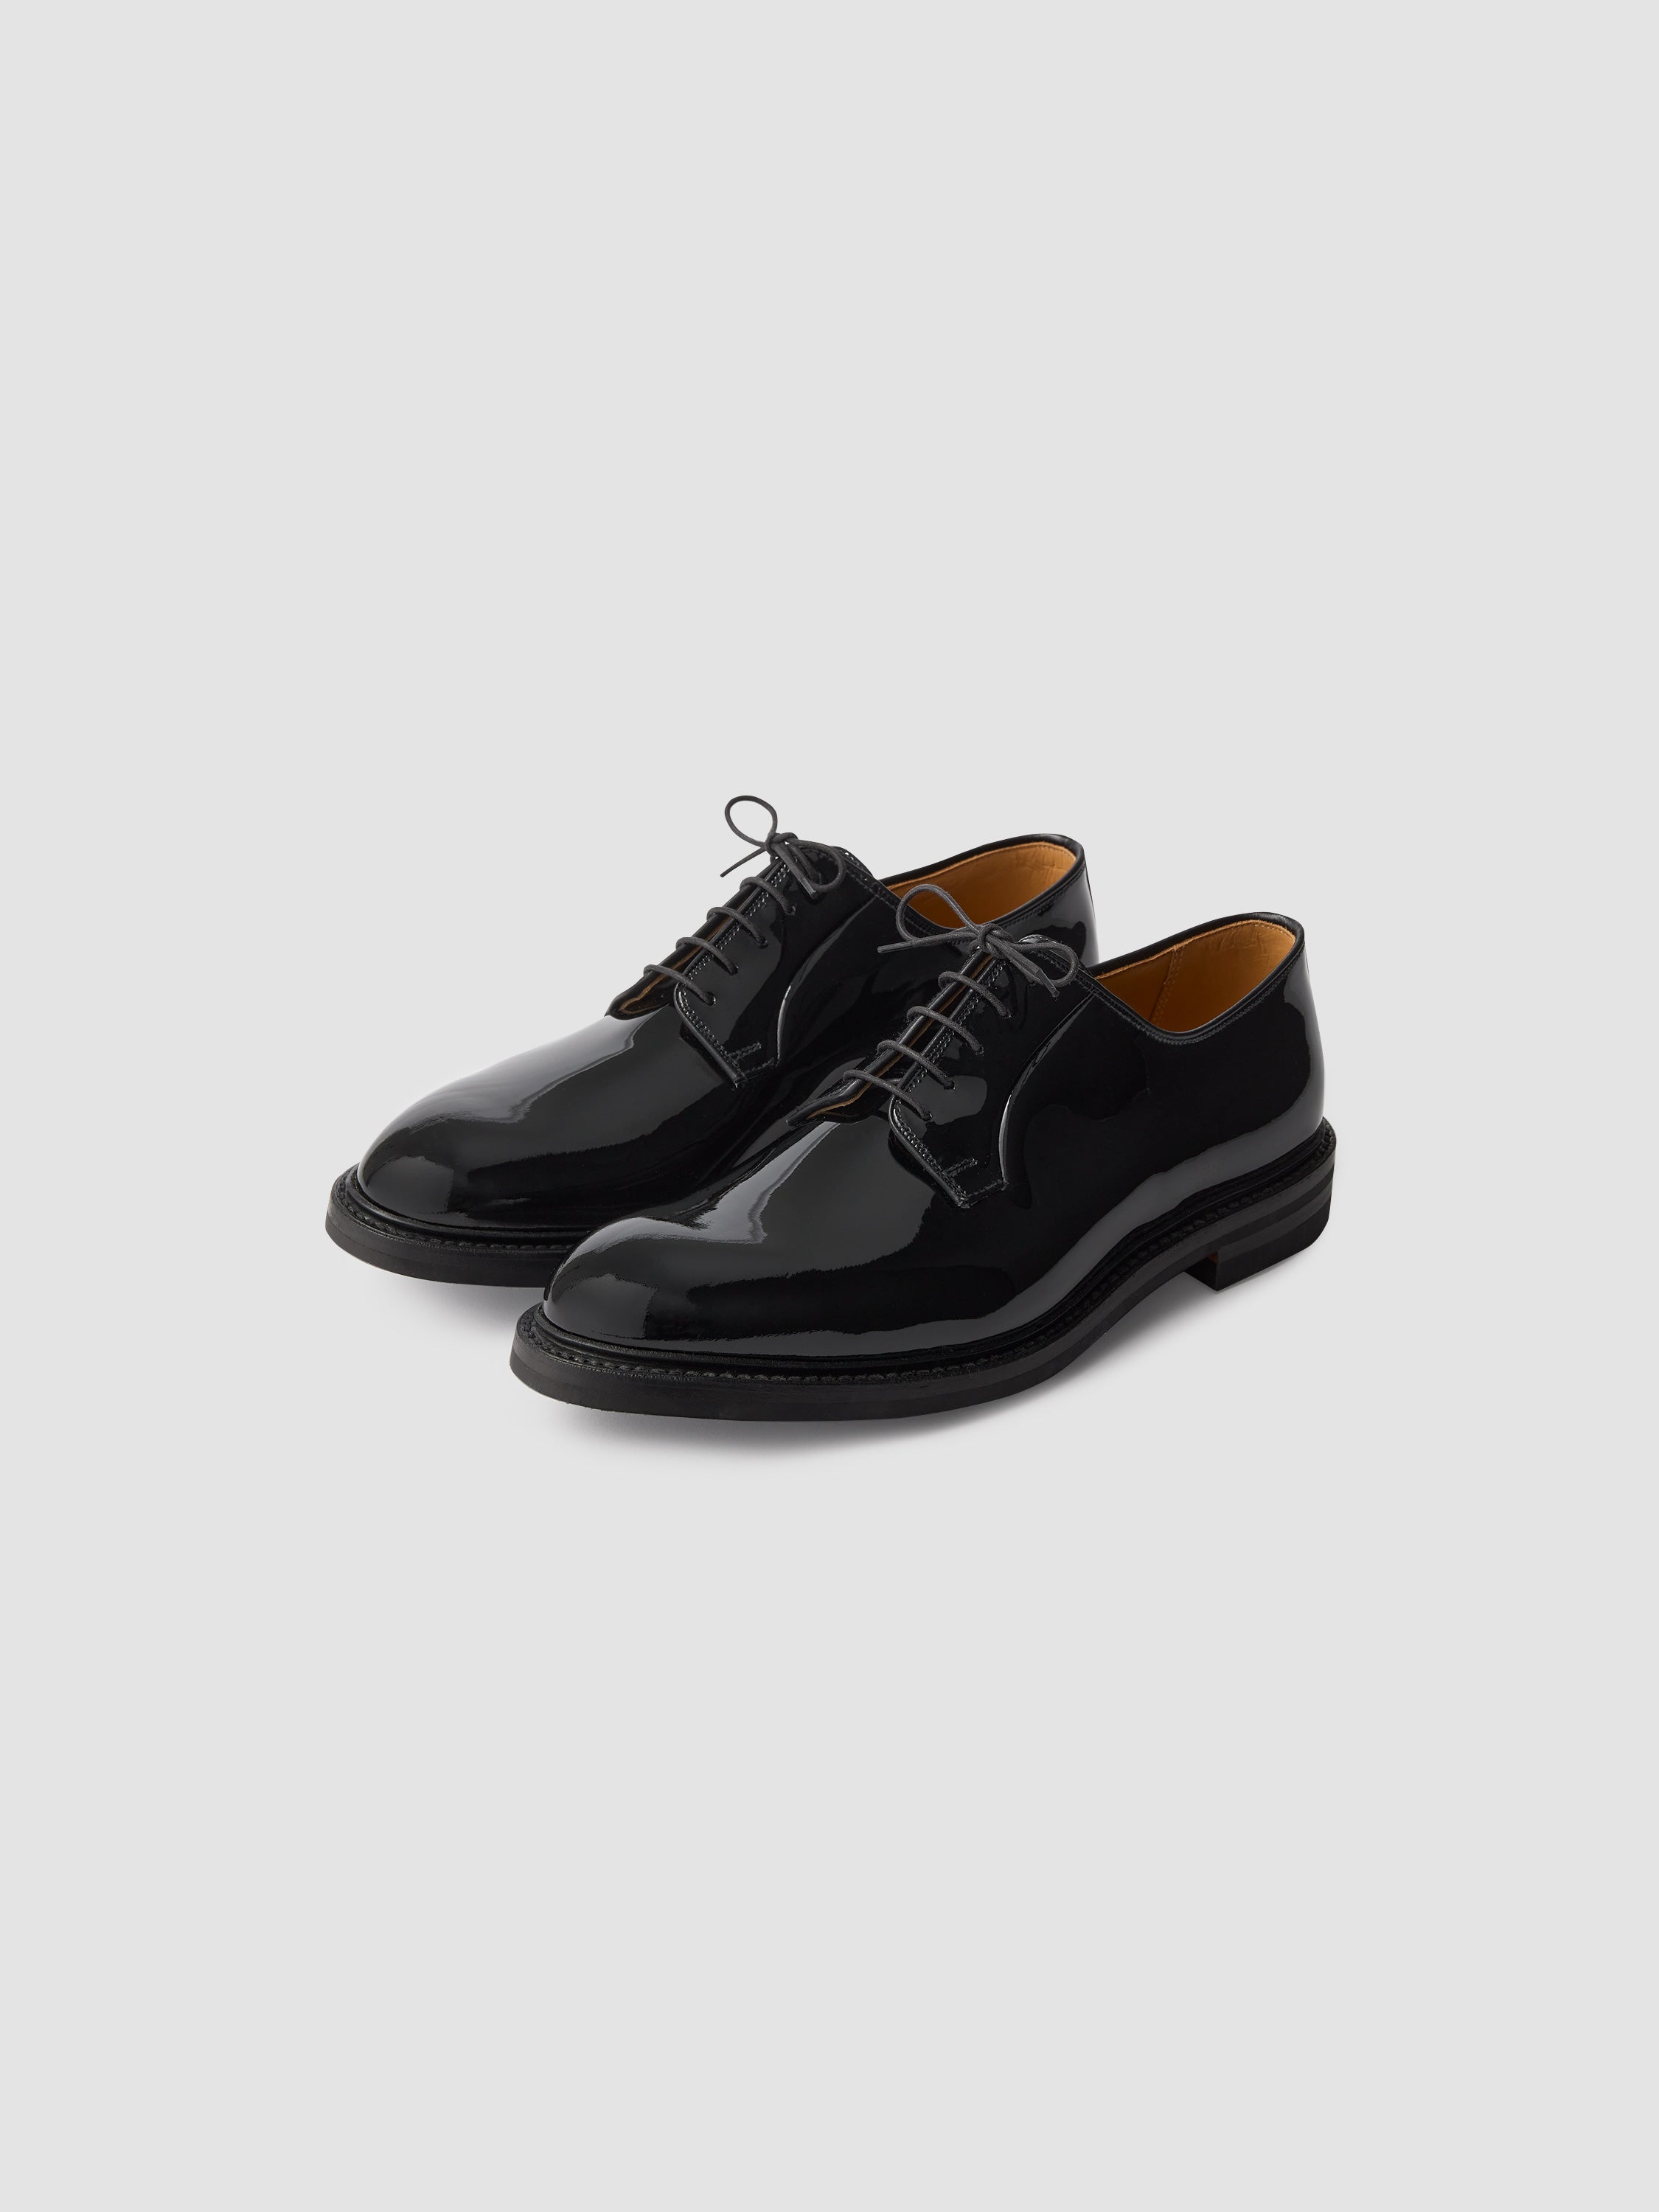 Patent Derby Dress Shoes Black Product Image